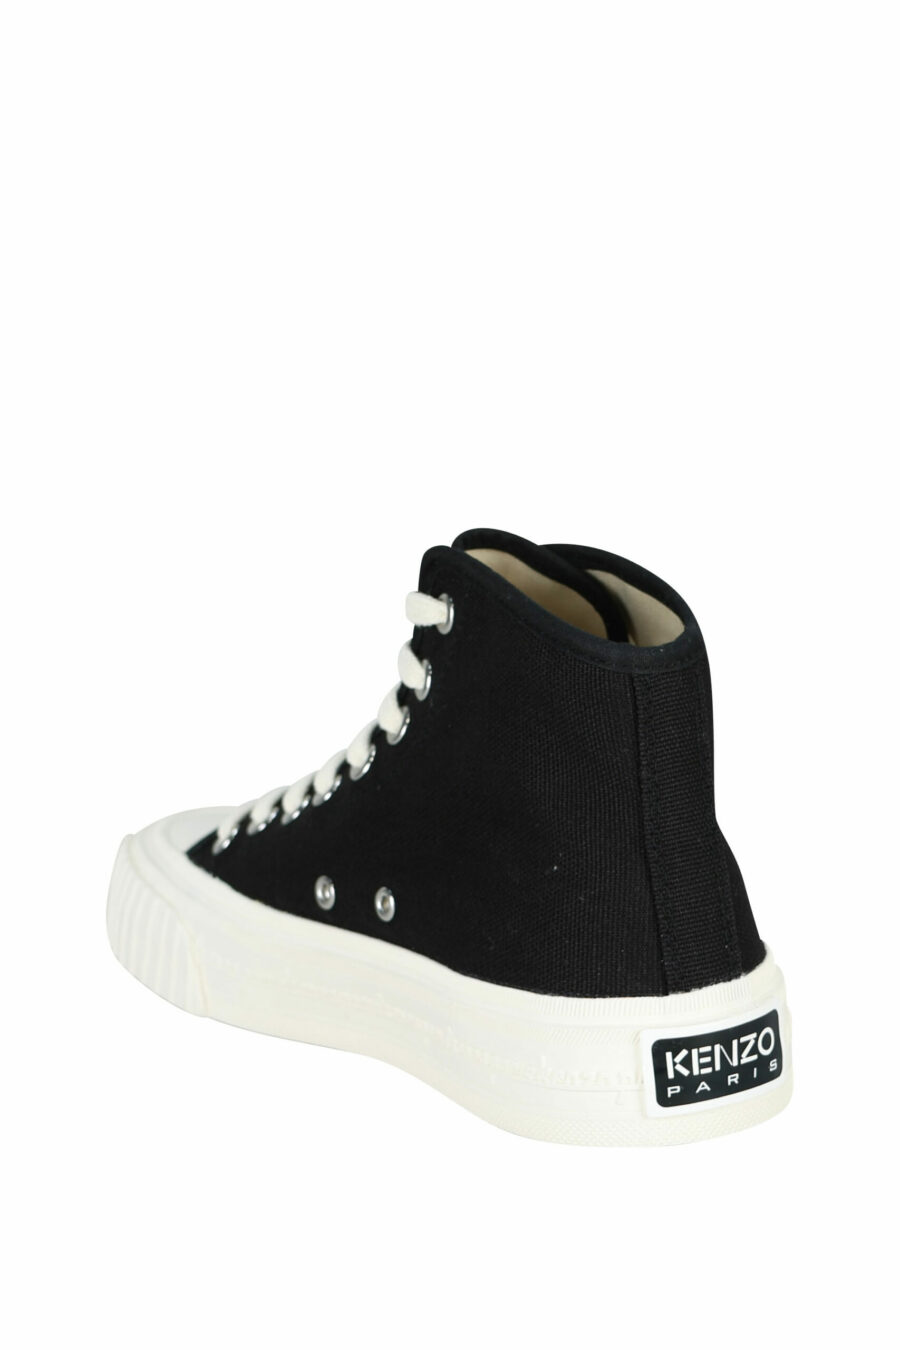 Zapatillas negras altas "kenzo foxy" con logo "boke flower" blanco - 3612230639515 3 scaled